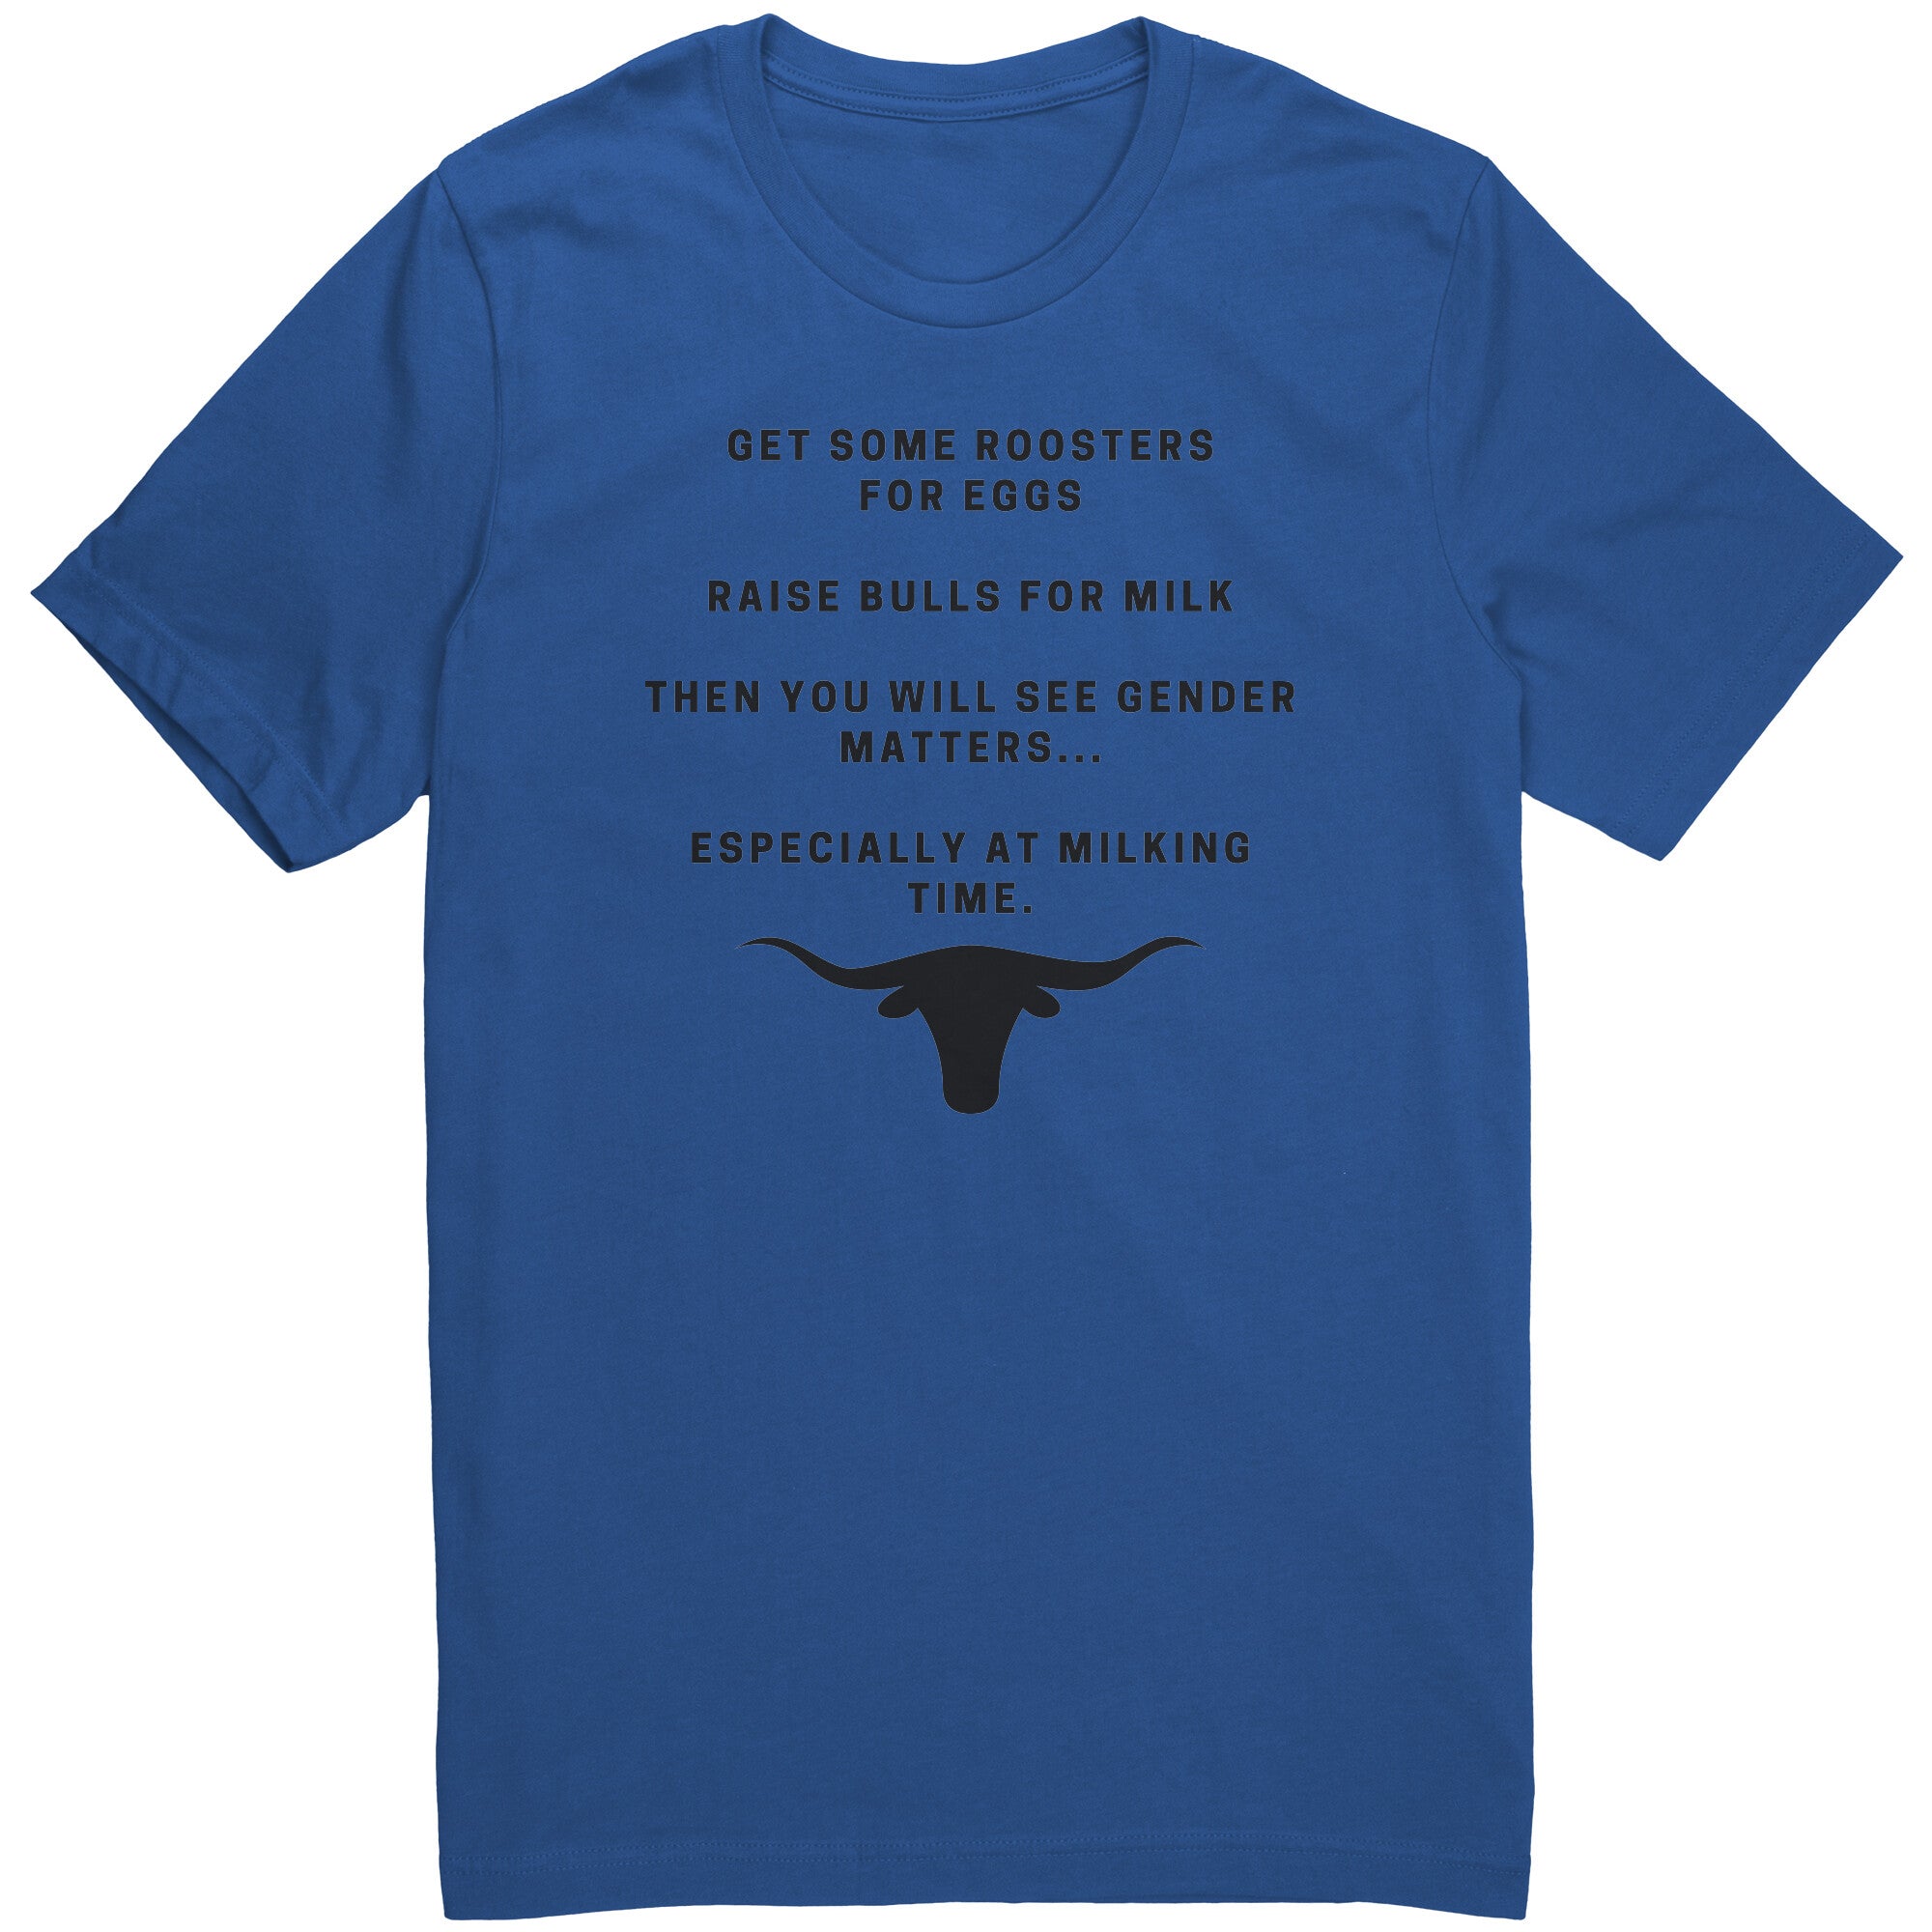 Funny Mens Shirt, Sarcastic Shirt For Men, Novelty Shirts, Offensive Shirt Milk A Bull Gender Matters Unisex Tee blue